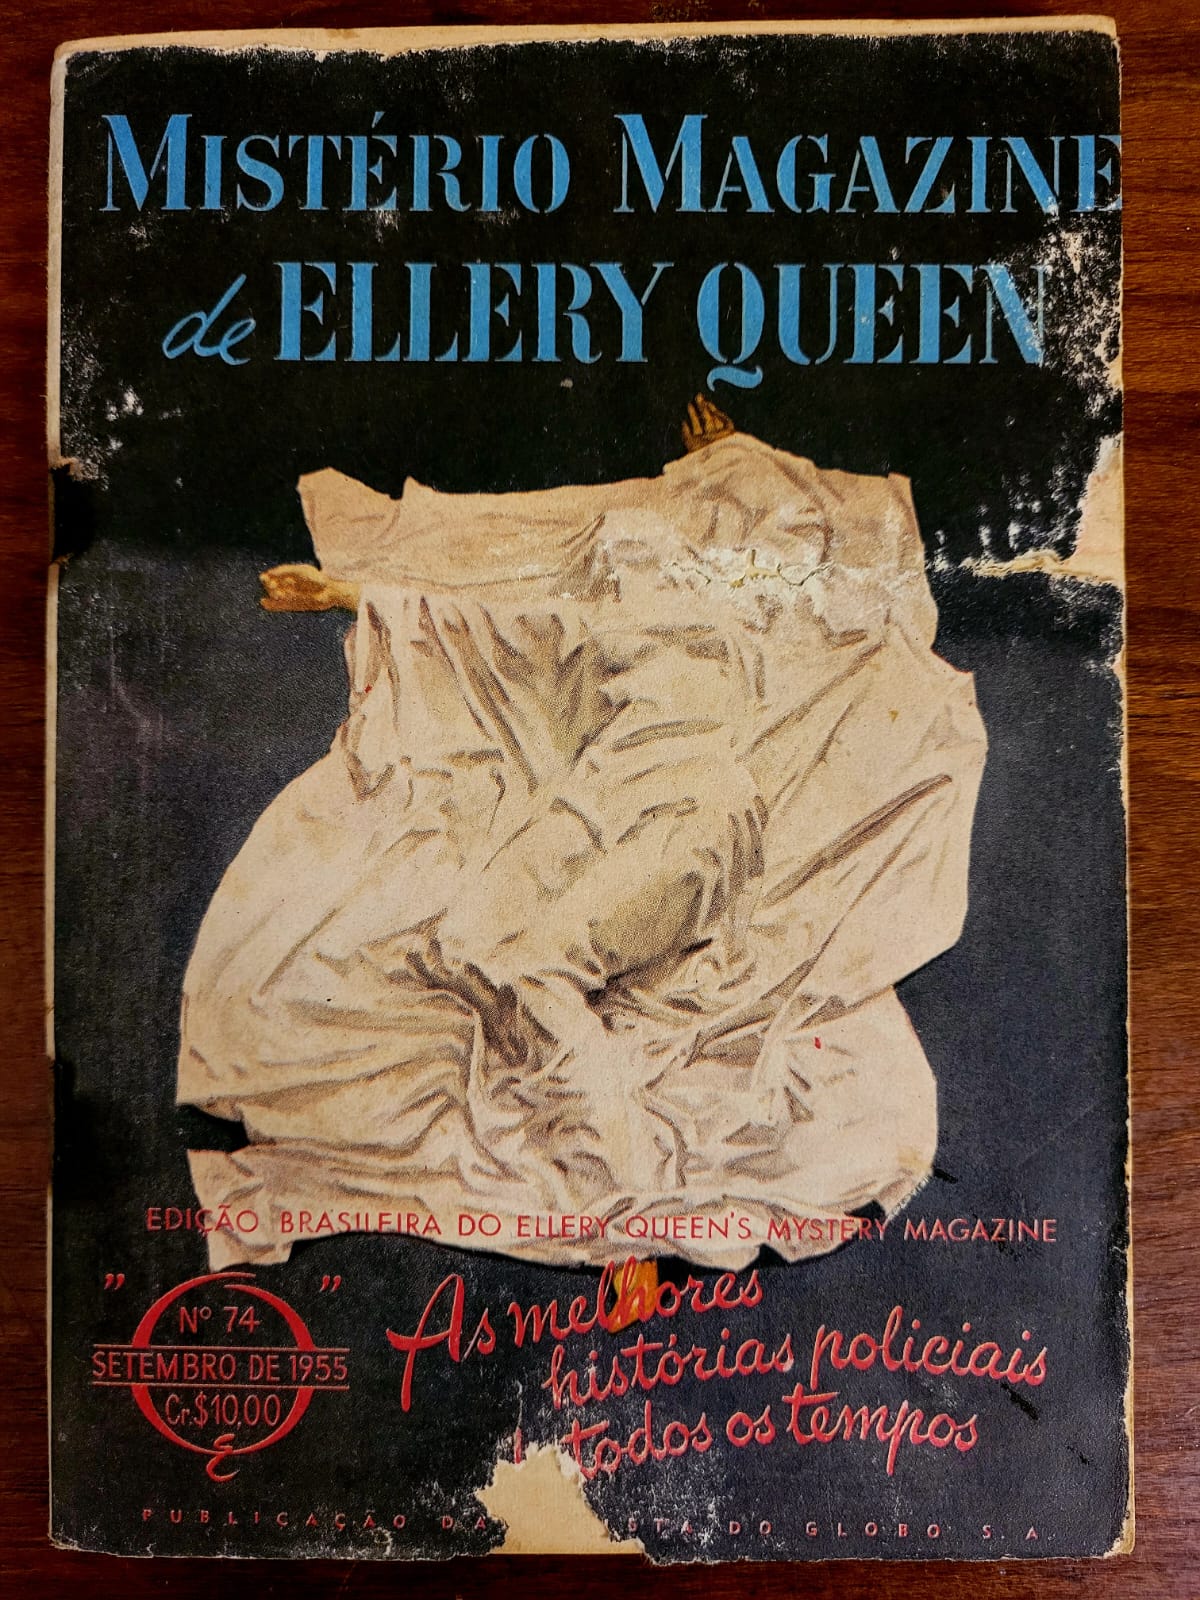 Misterio Magazine de Ellery Queen 74 Casa do Colecionador